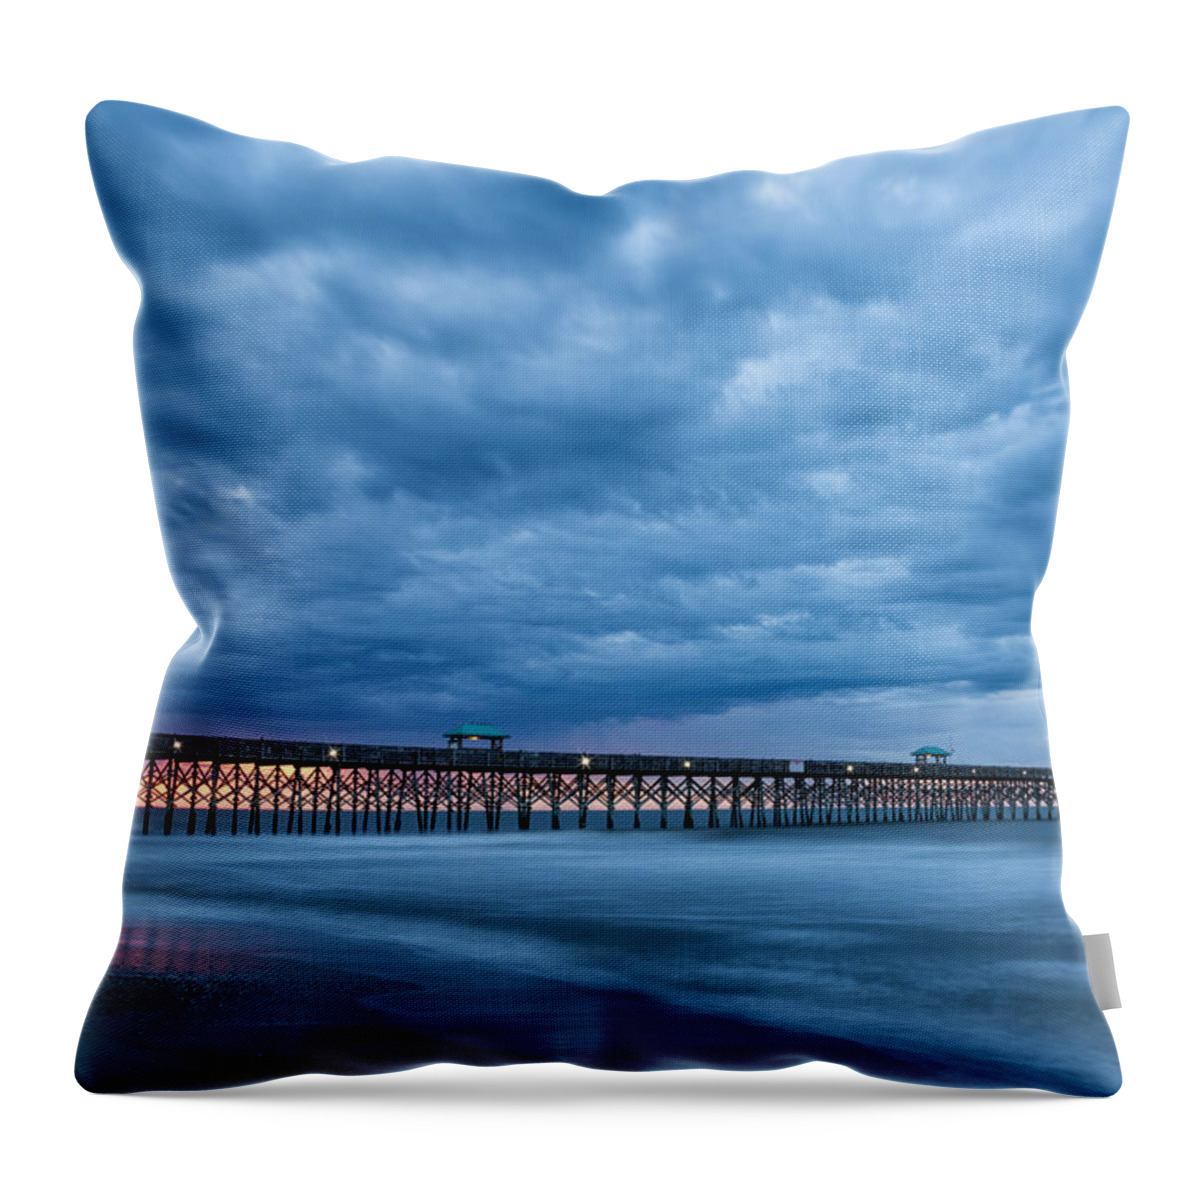 South Carolina Throw Pillow featuring the photograph Before Sunrise at Folly Beach Pier, South Carolina by Denise Bush